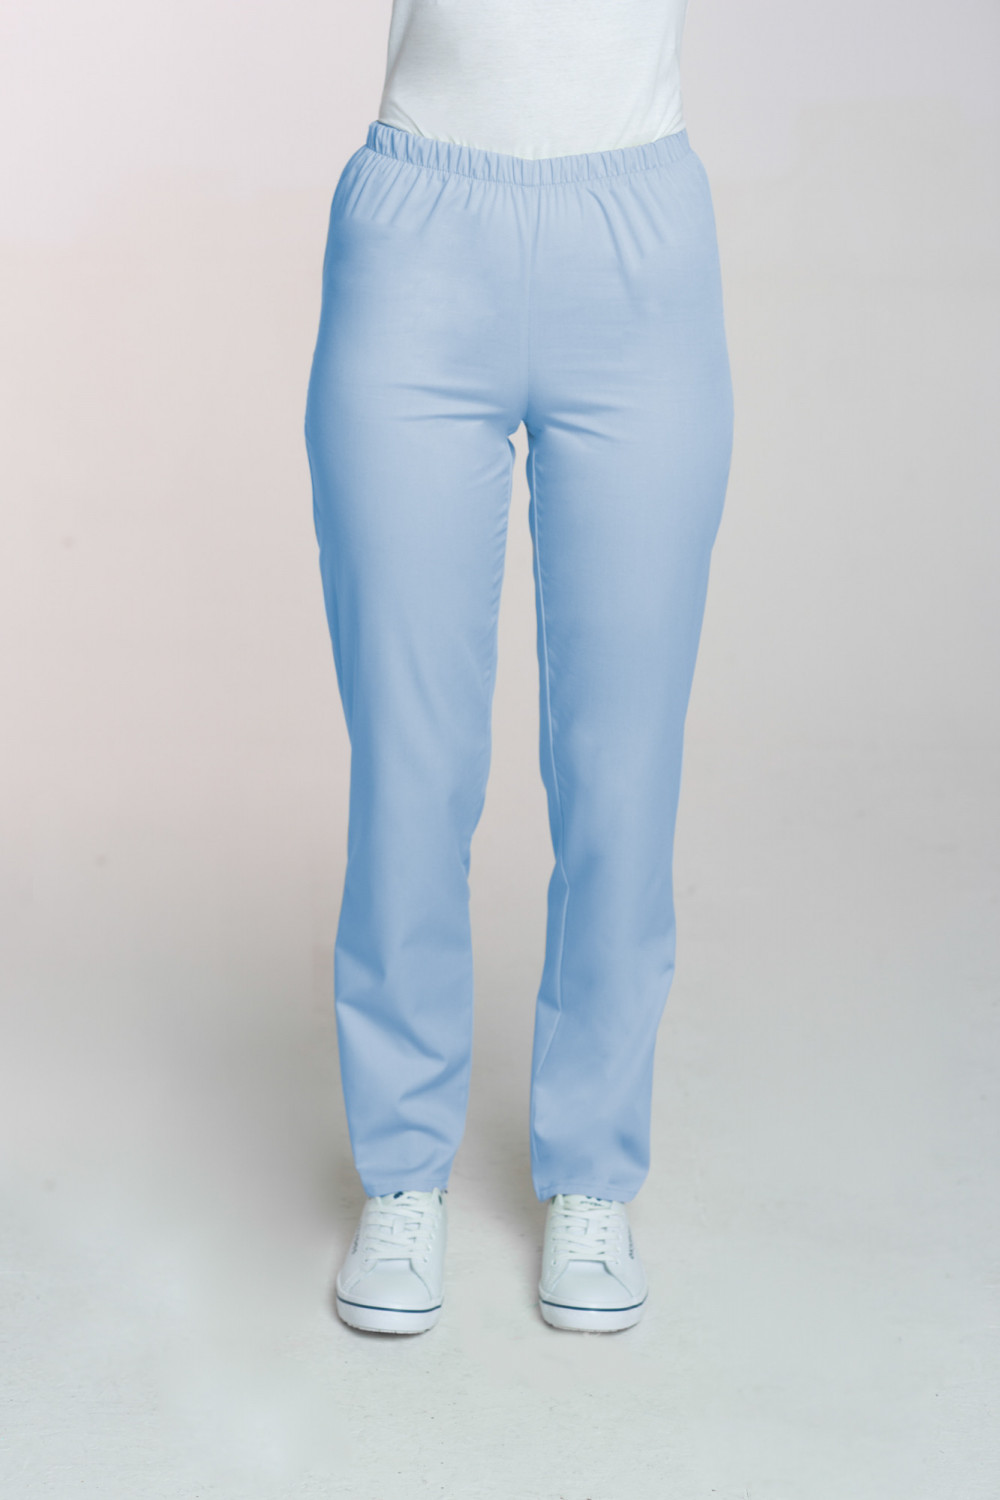 M-086 Spodnie damskie medyczne spodnie do pracy kolor błękit